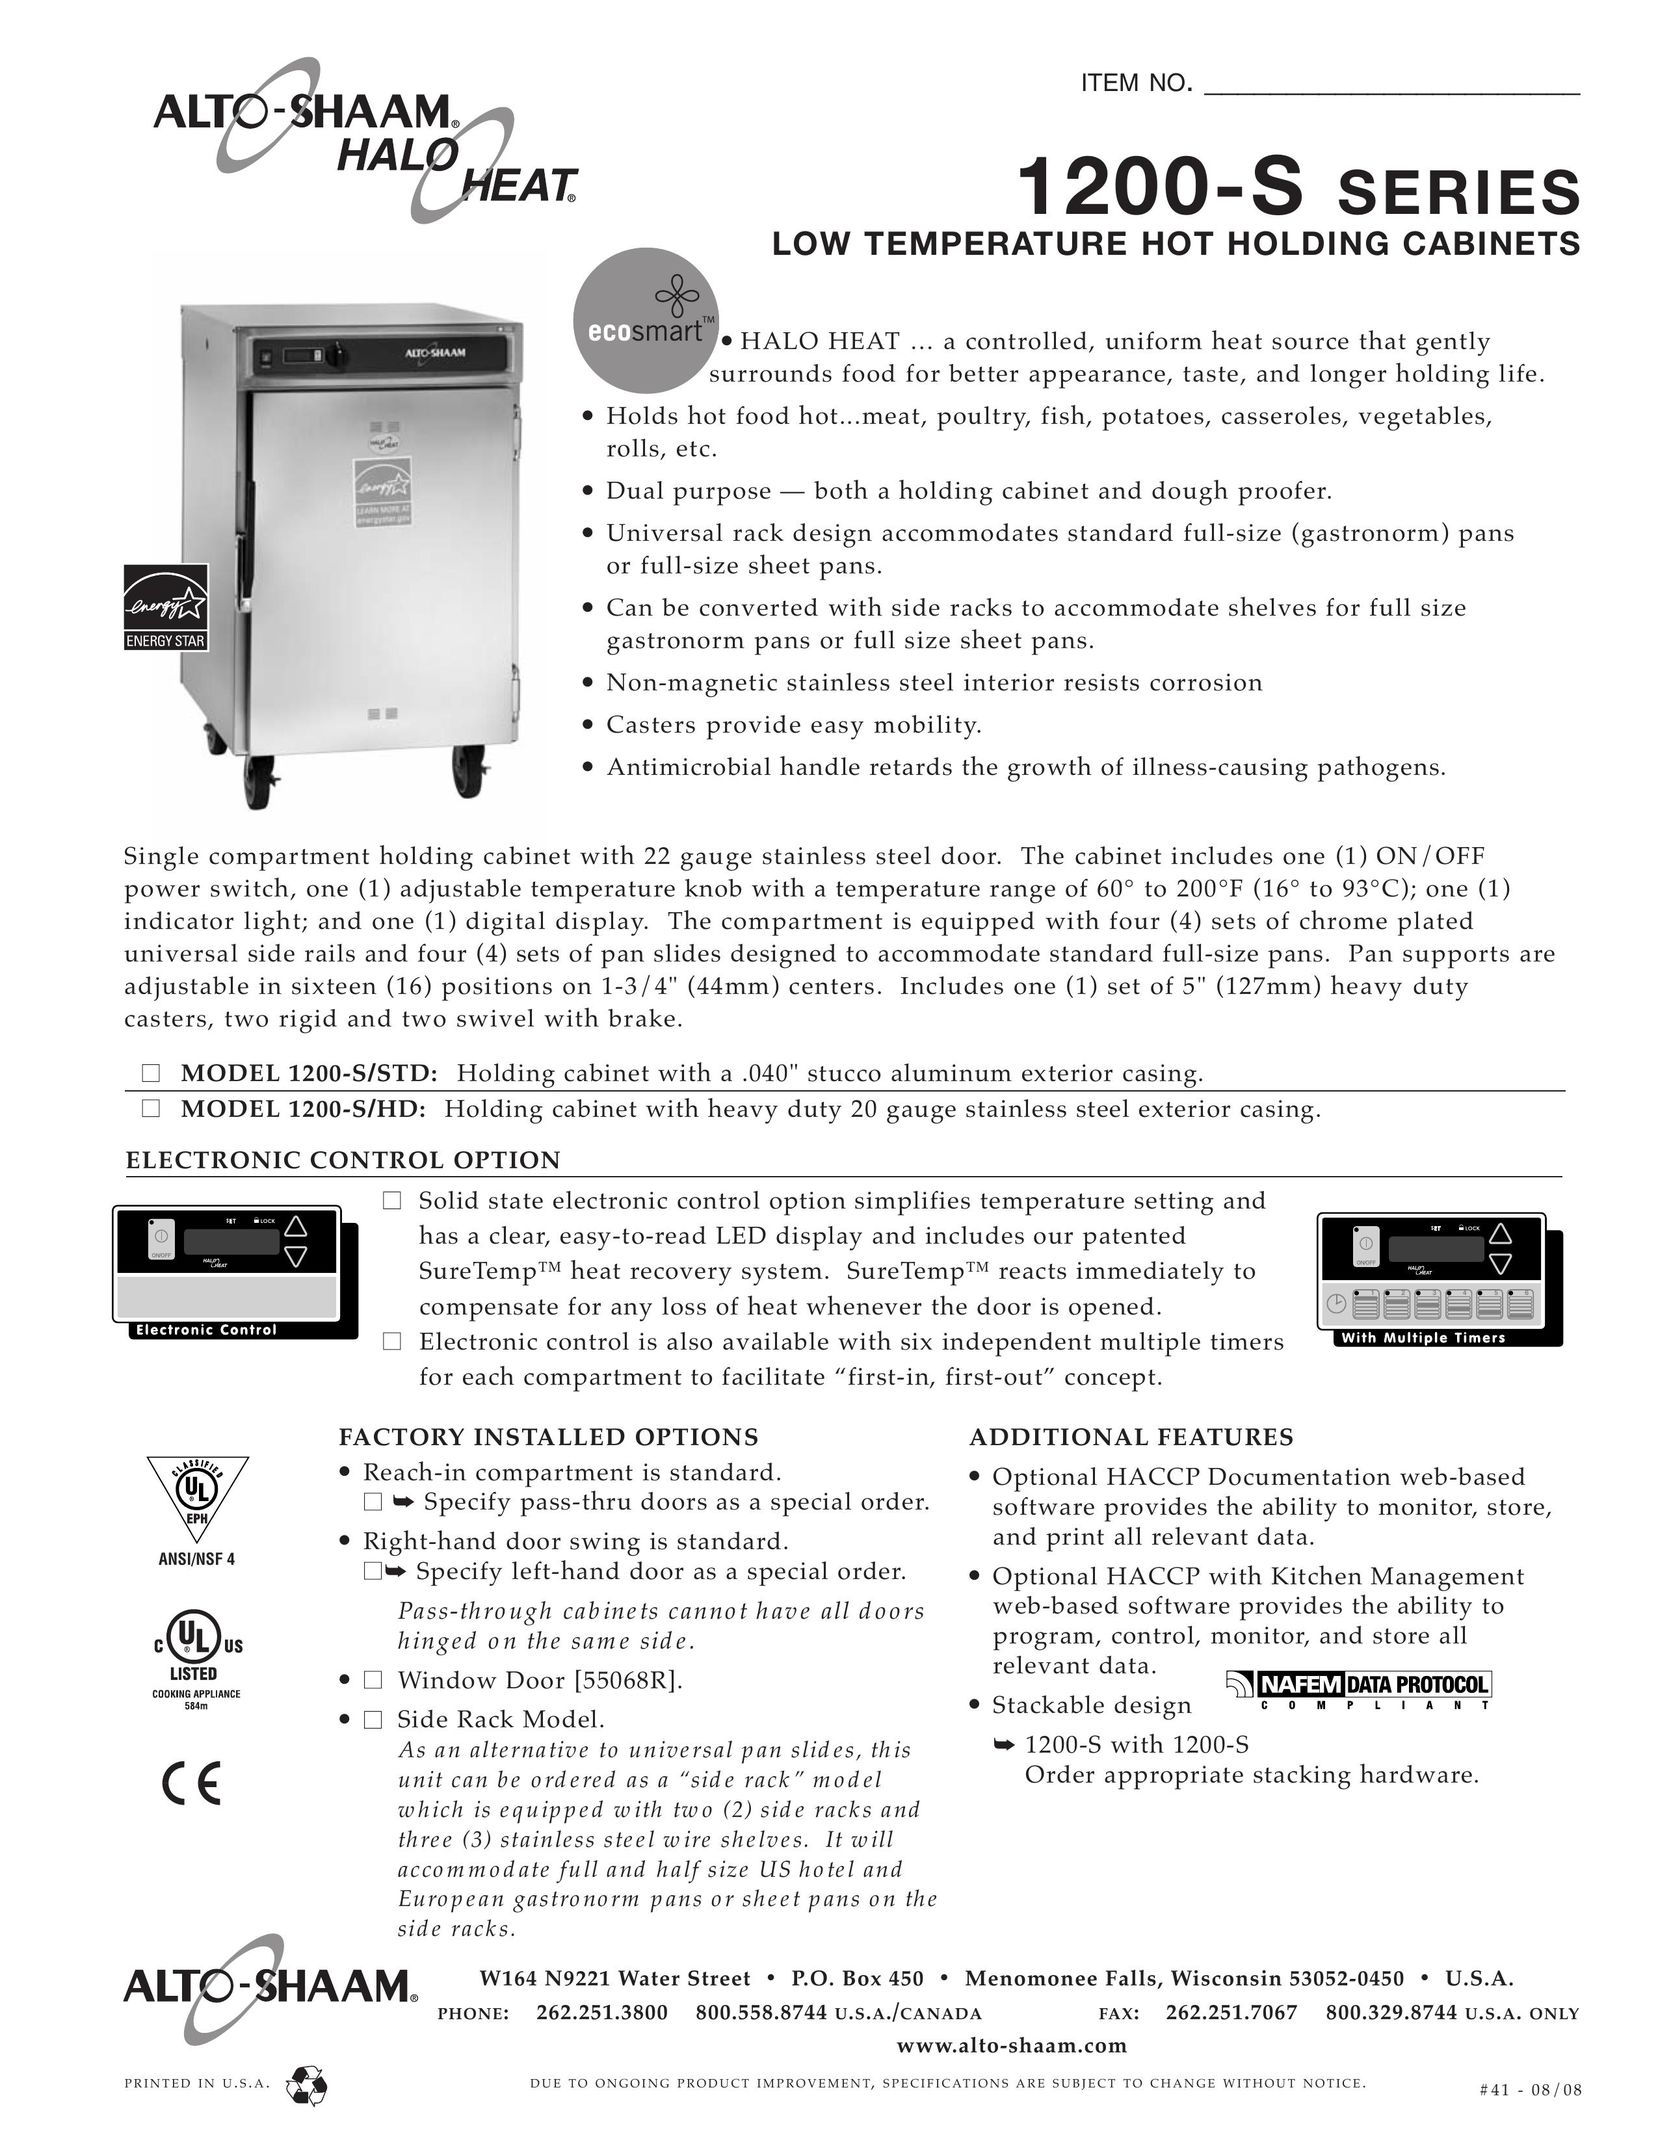 Alto-Shaam 1200-S/STD Oven User Manual